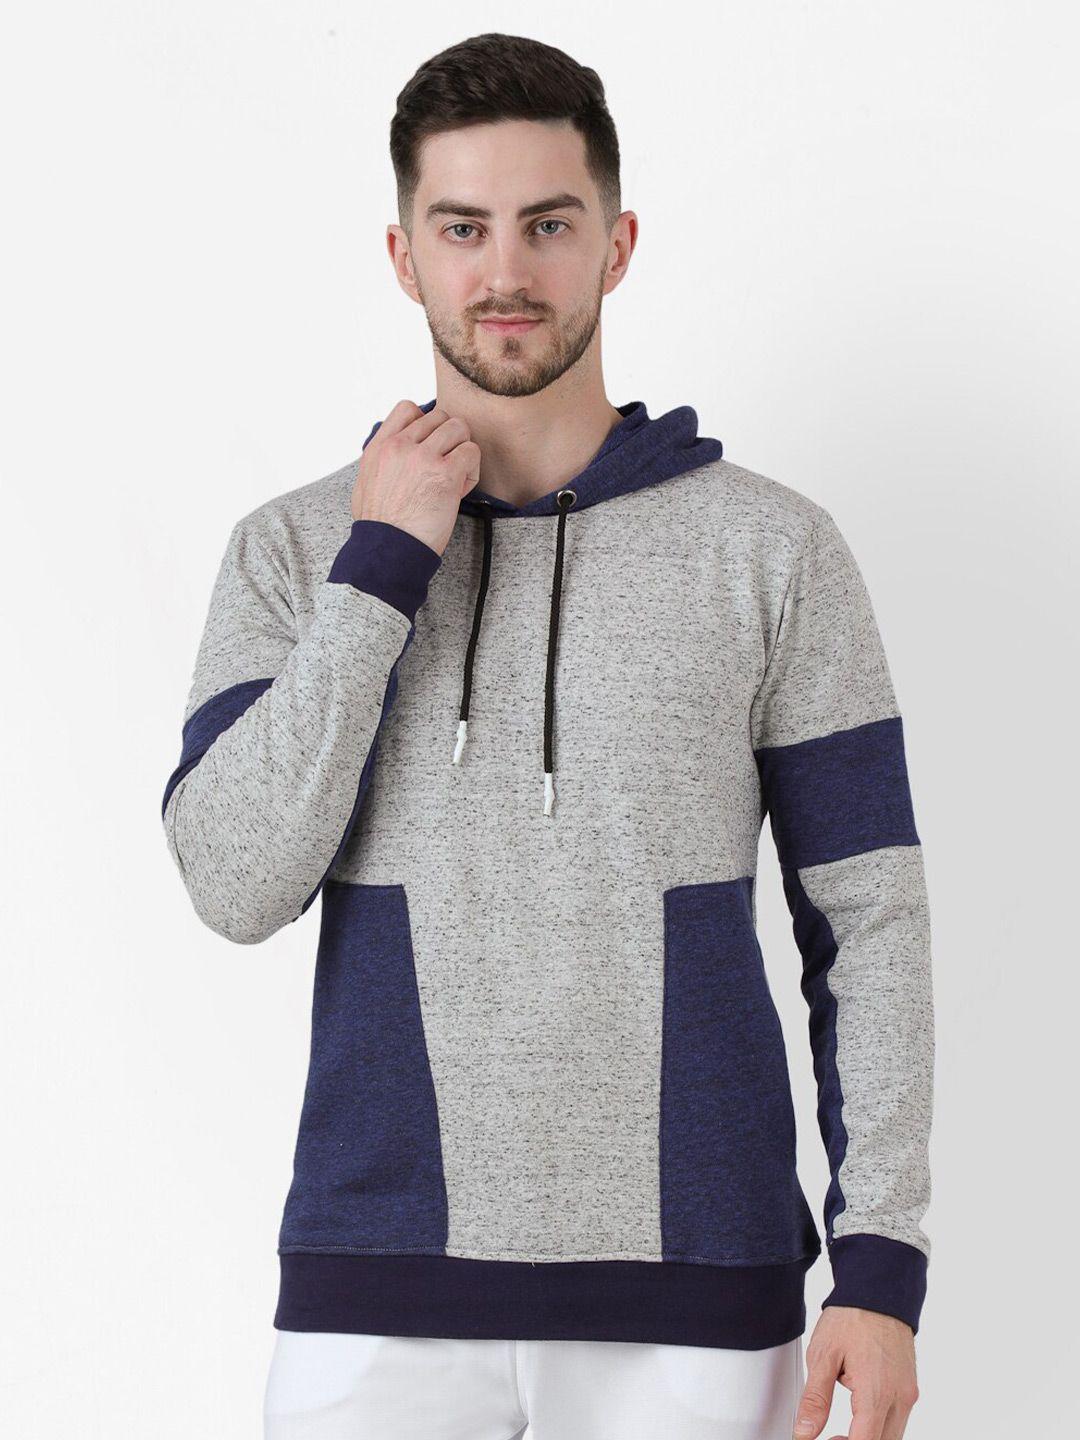 pause sport colourblocked fleece hooded pullover sweatshirt